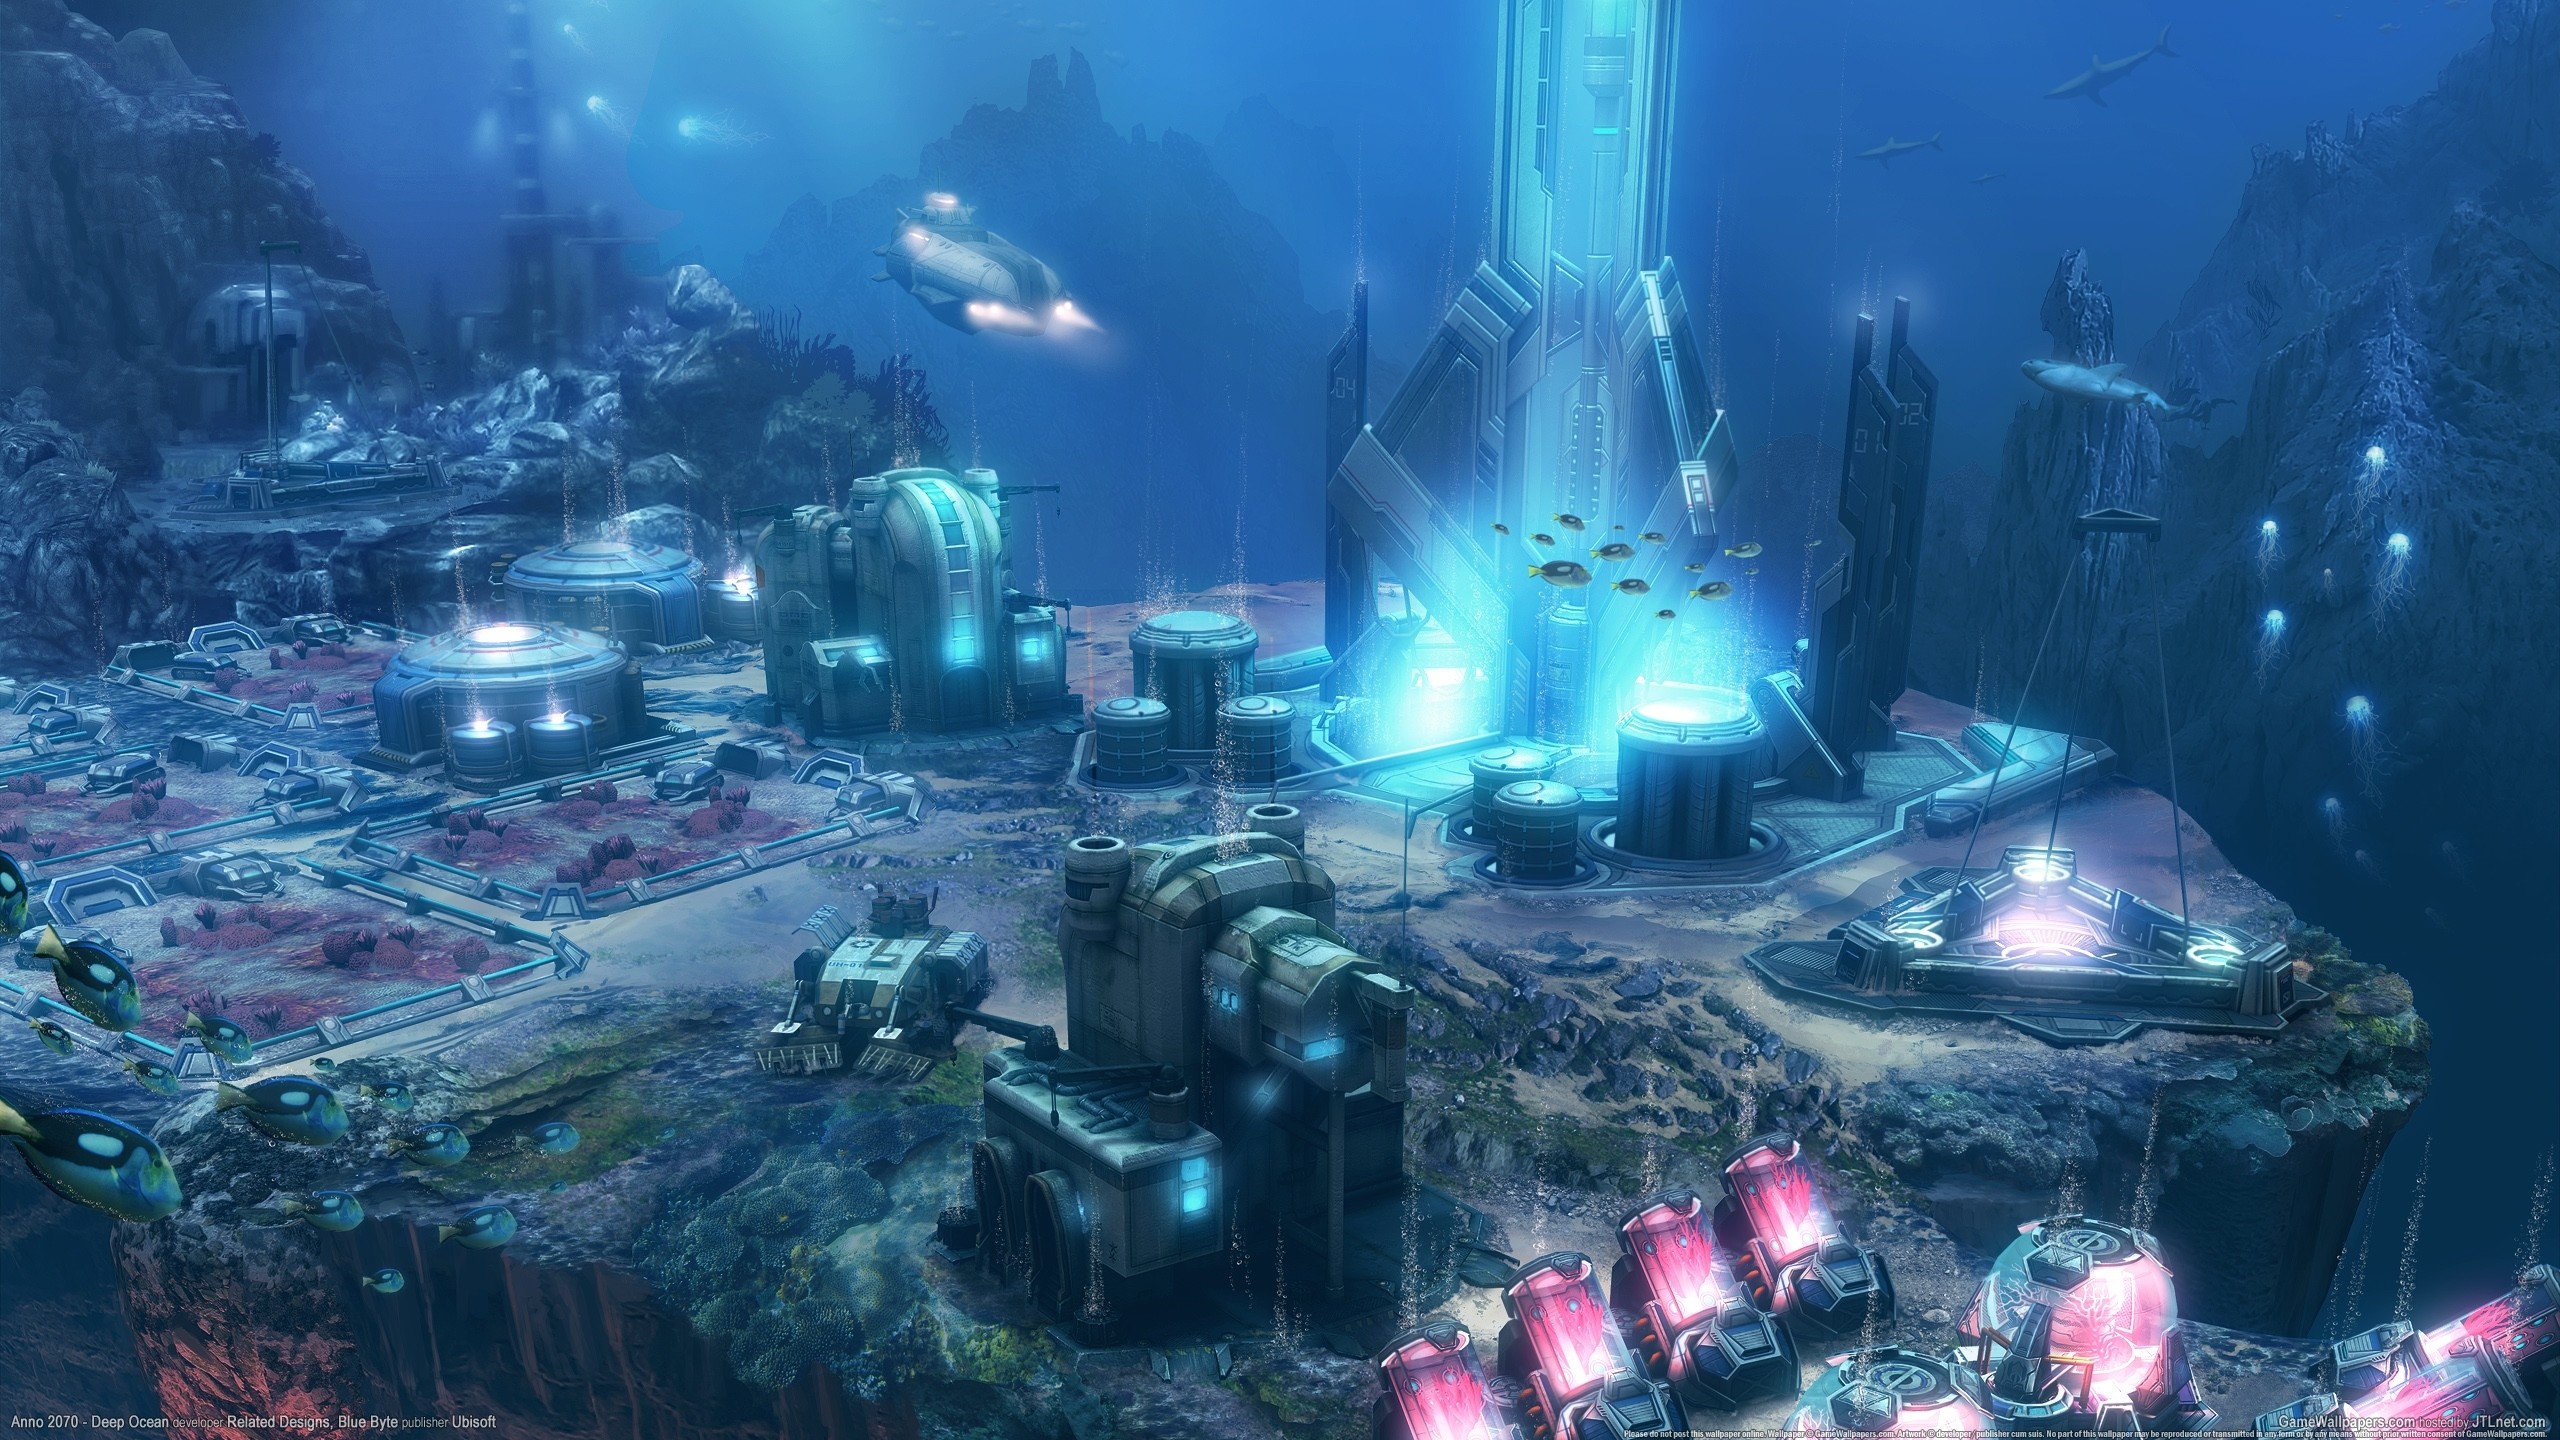 ANNO 2070 Deep Ocean sci-fi underwater city wallpaper | | 126552  | WallpaperUP